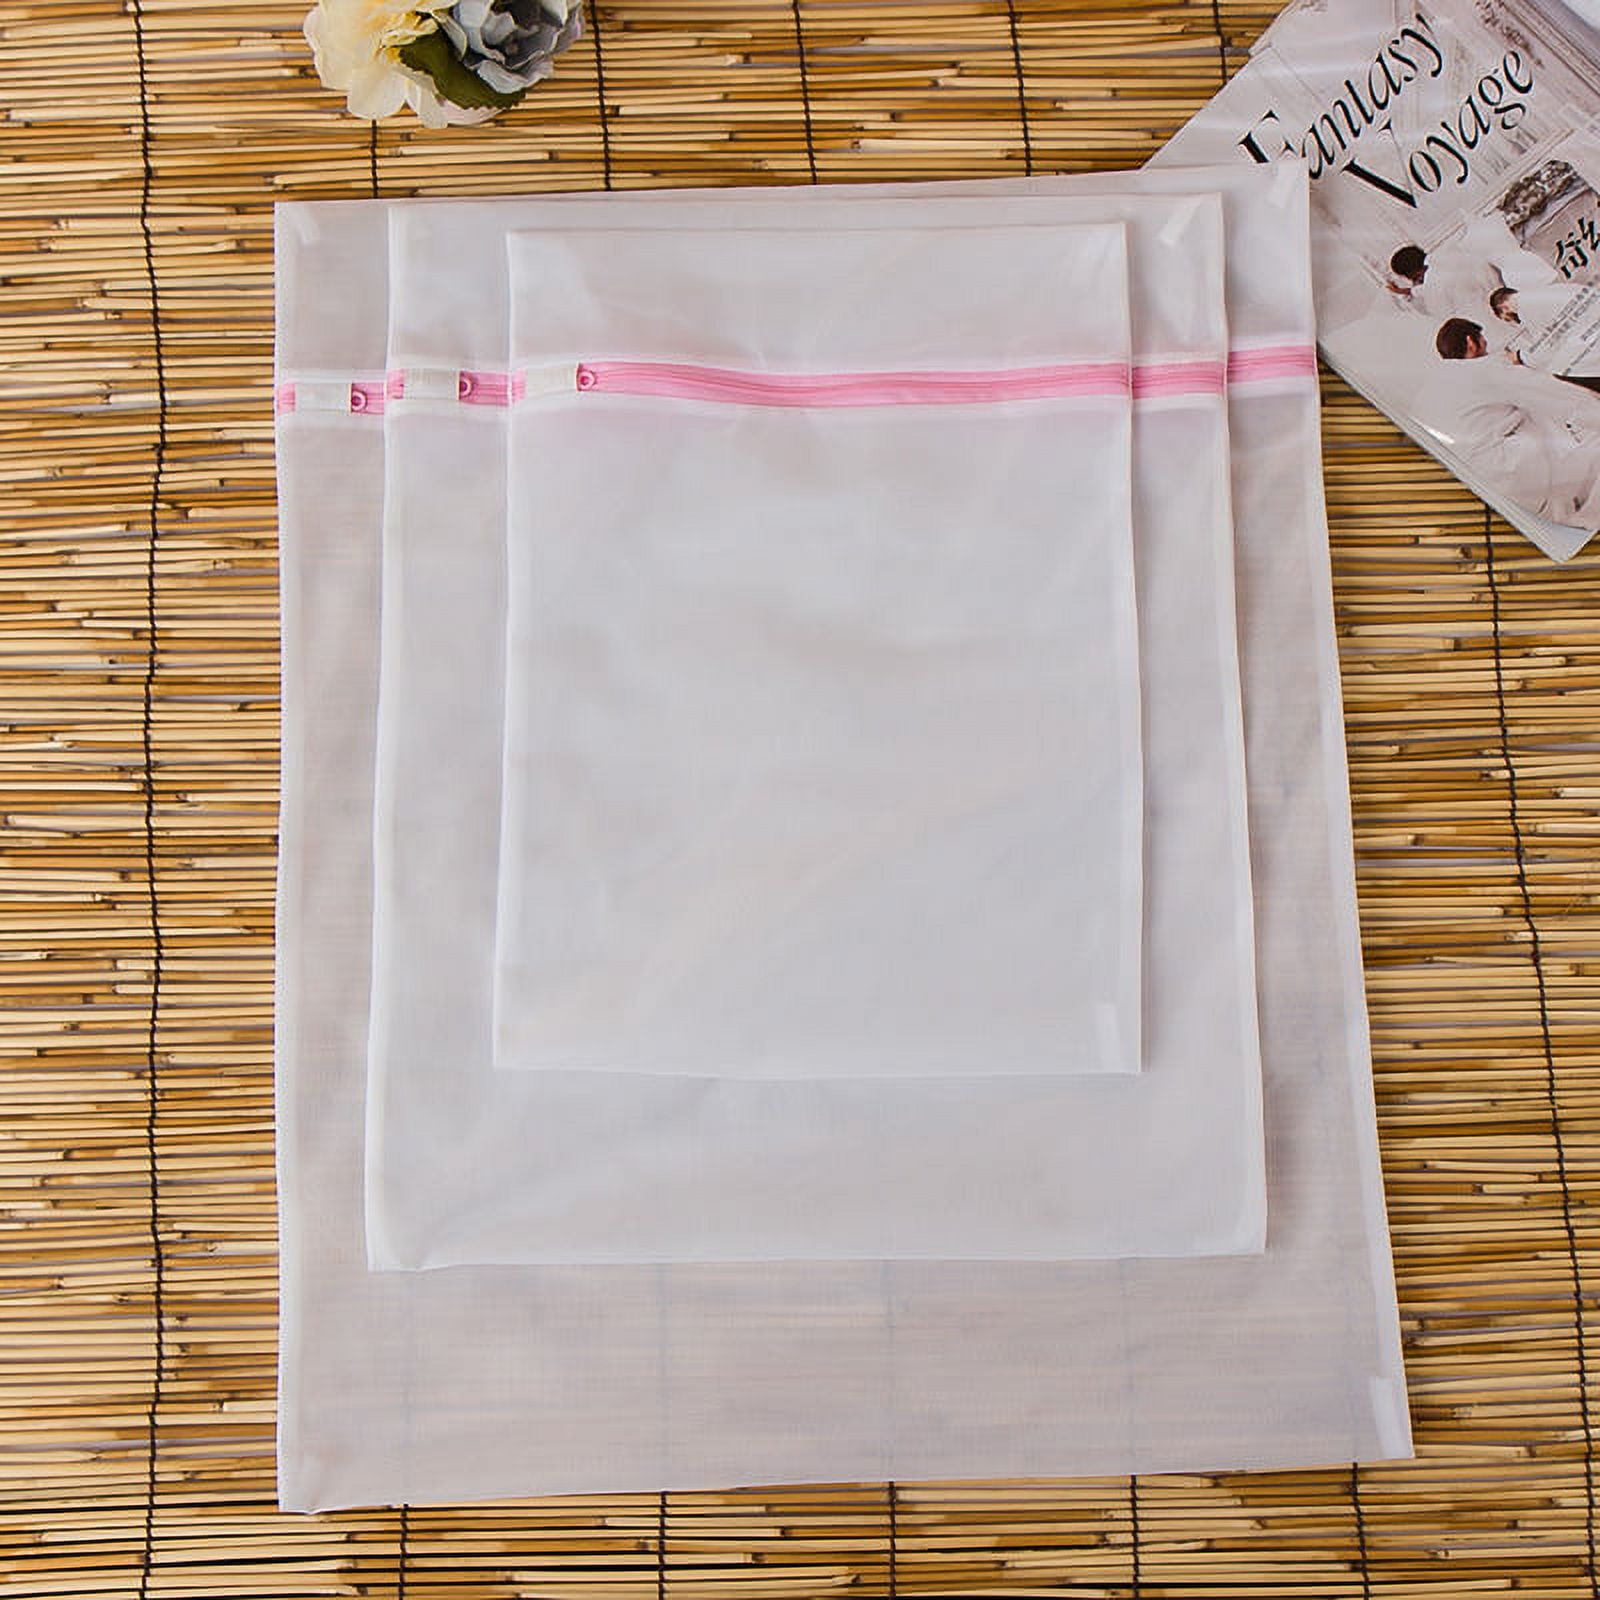 Cotton Mesh Laundry Wash Bag – The Zeroish Co.